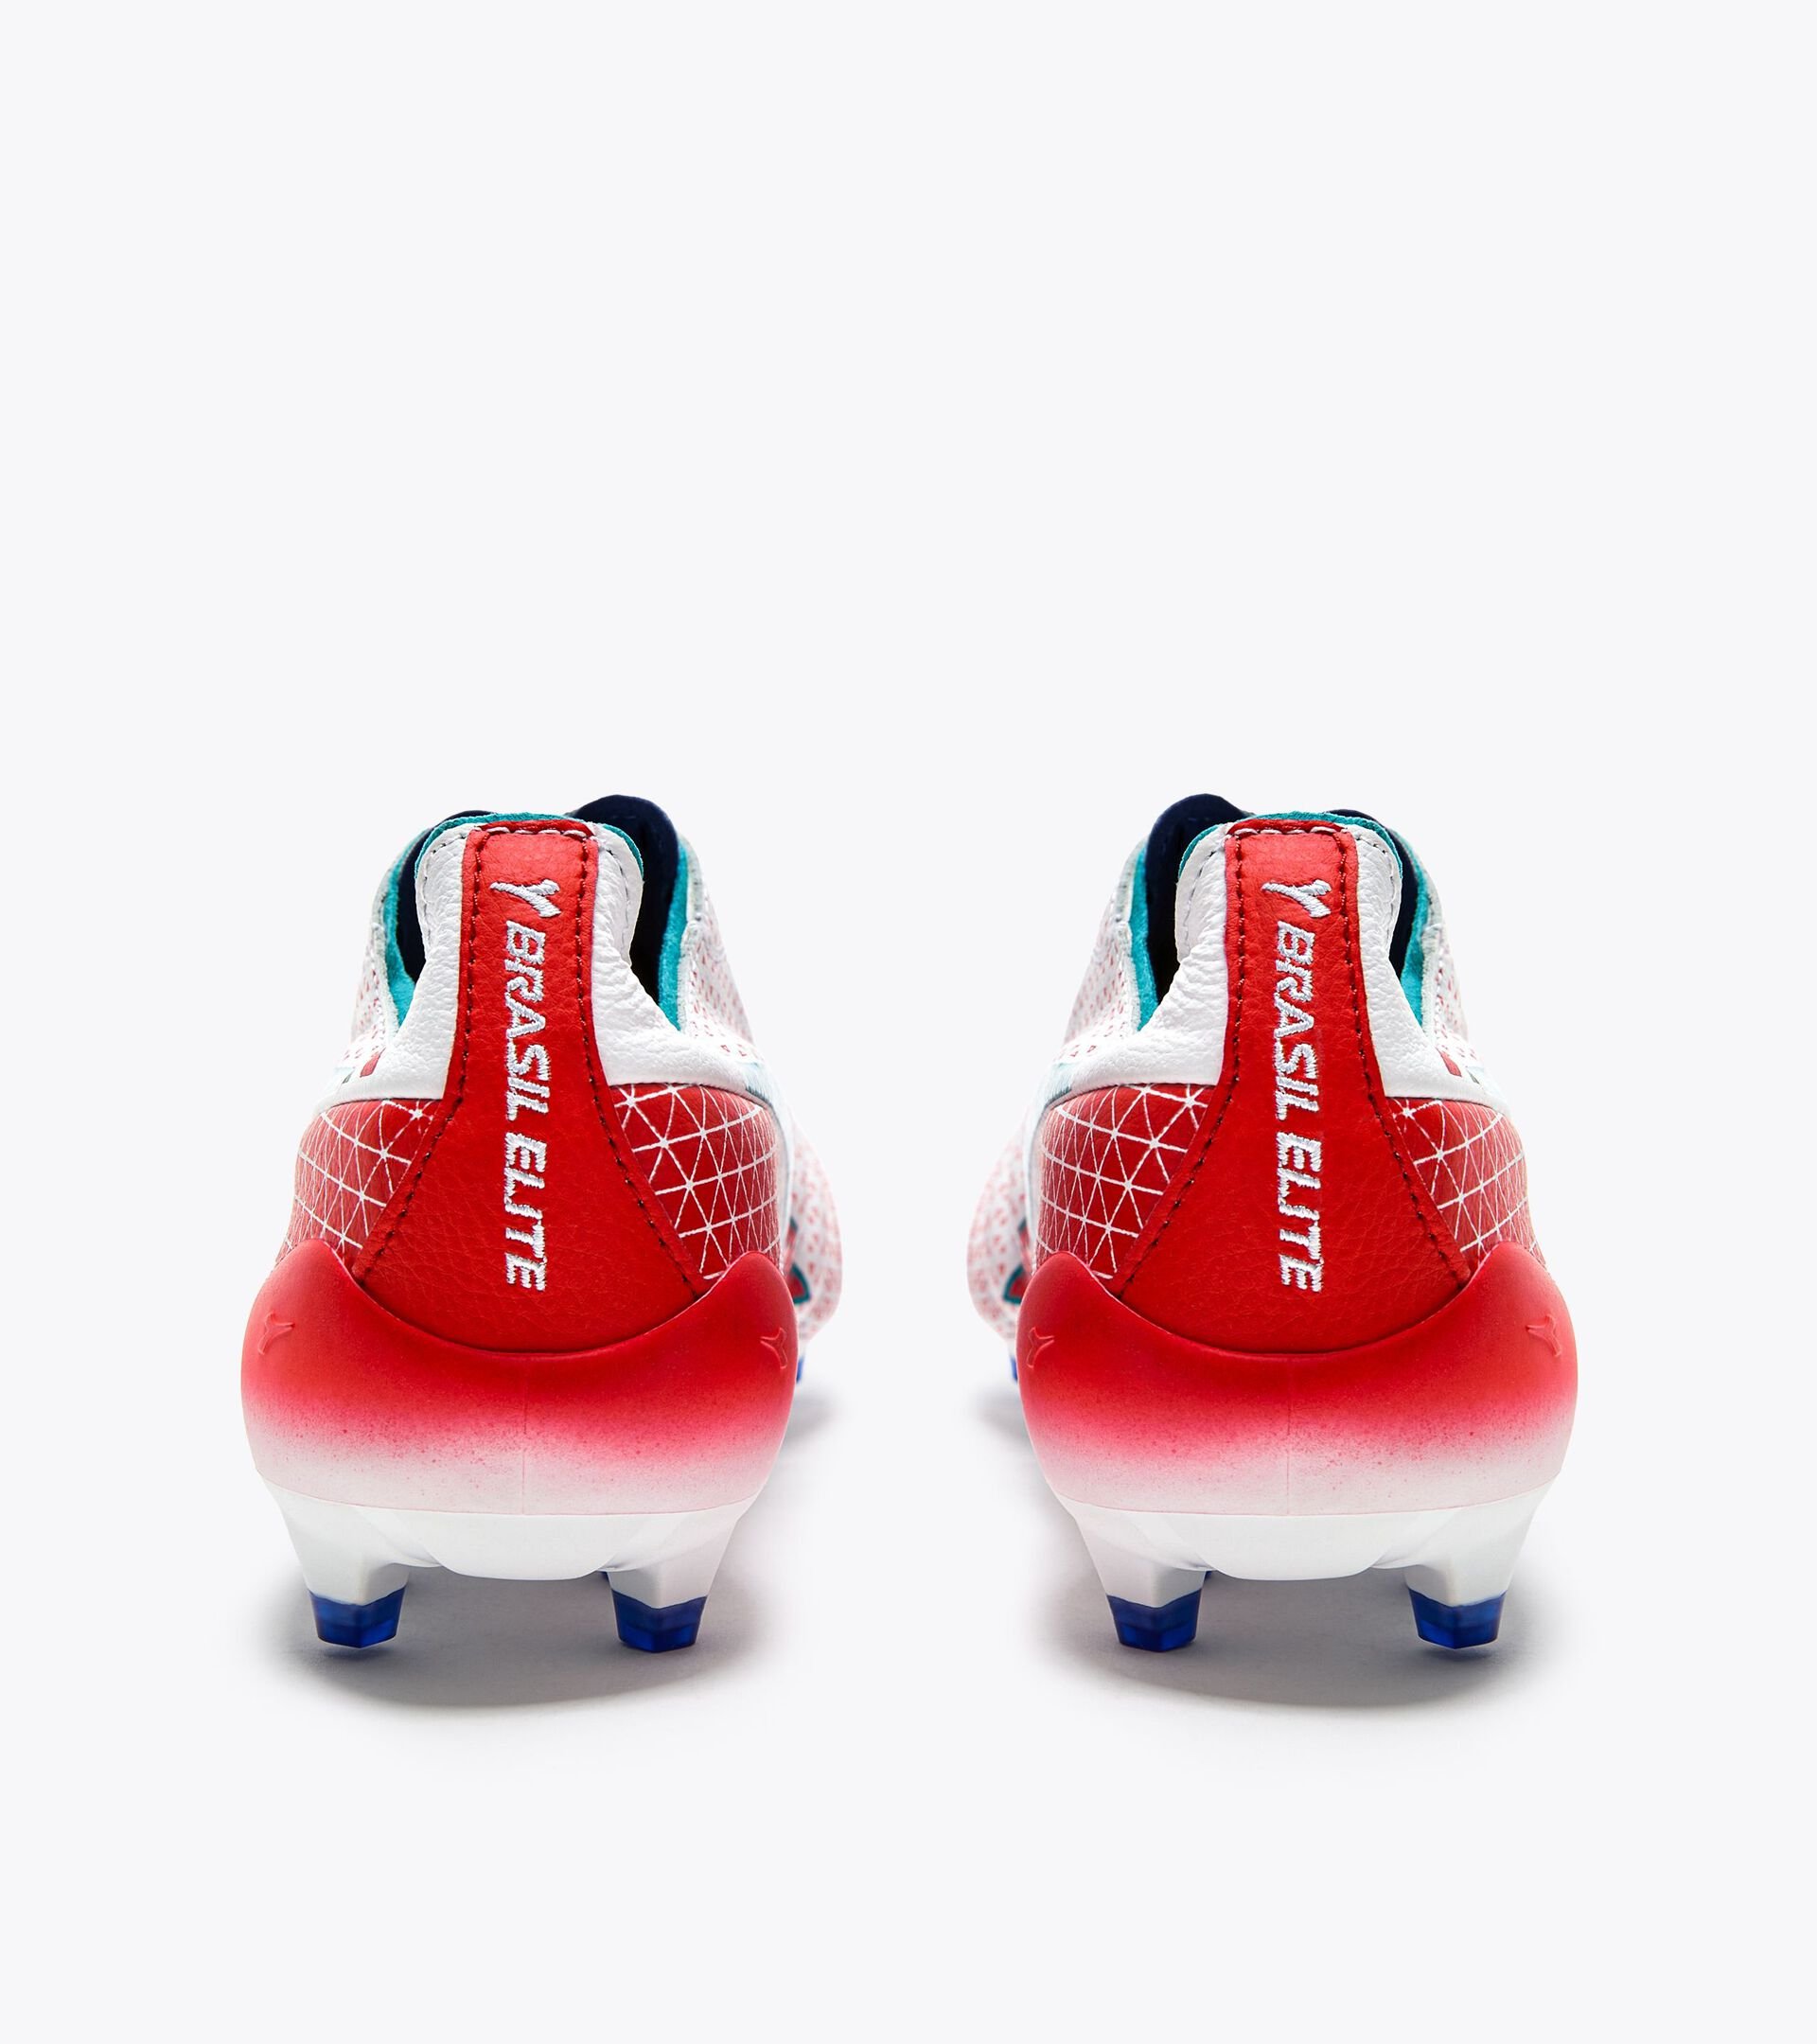 Chaussures de football pour terrains compacts - Made in Italy - Gender neutral  BRASIL ELITE TECH GR ITA LPX BLC/CARREAU BLEU/ROUGE FLUO - Diadora